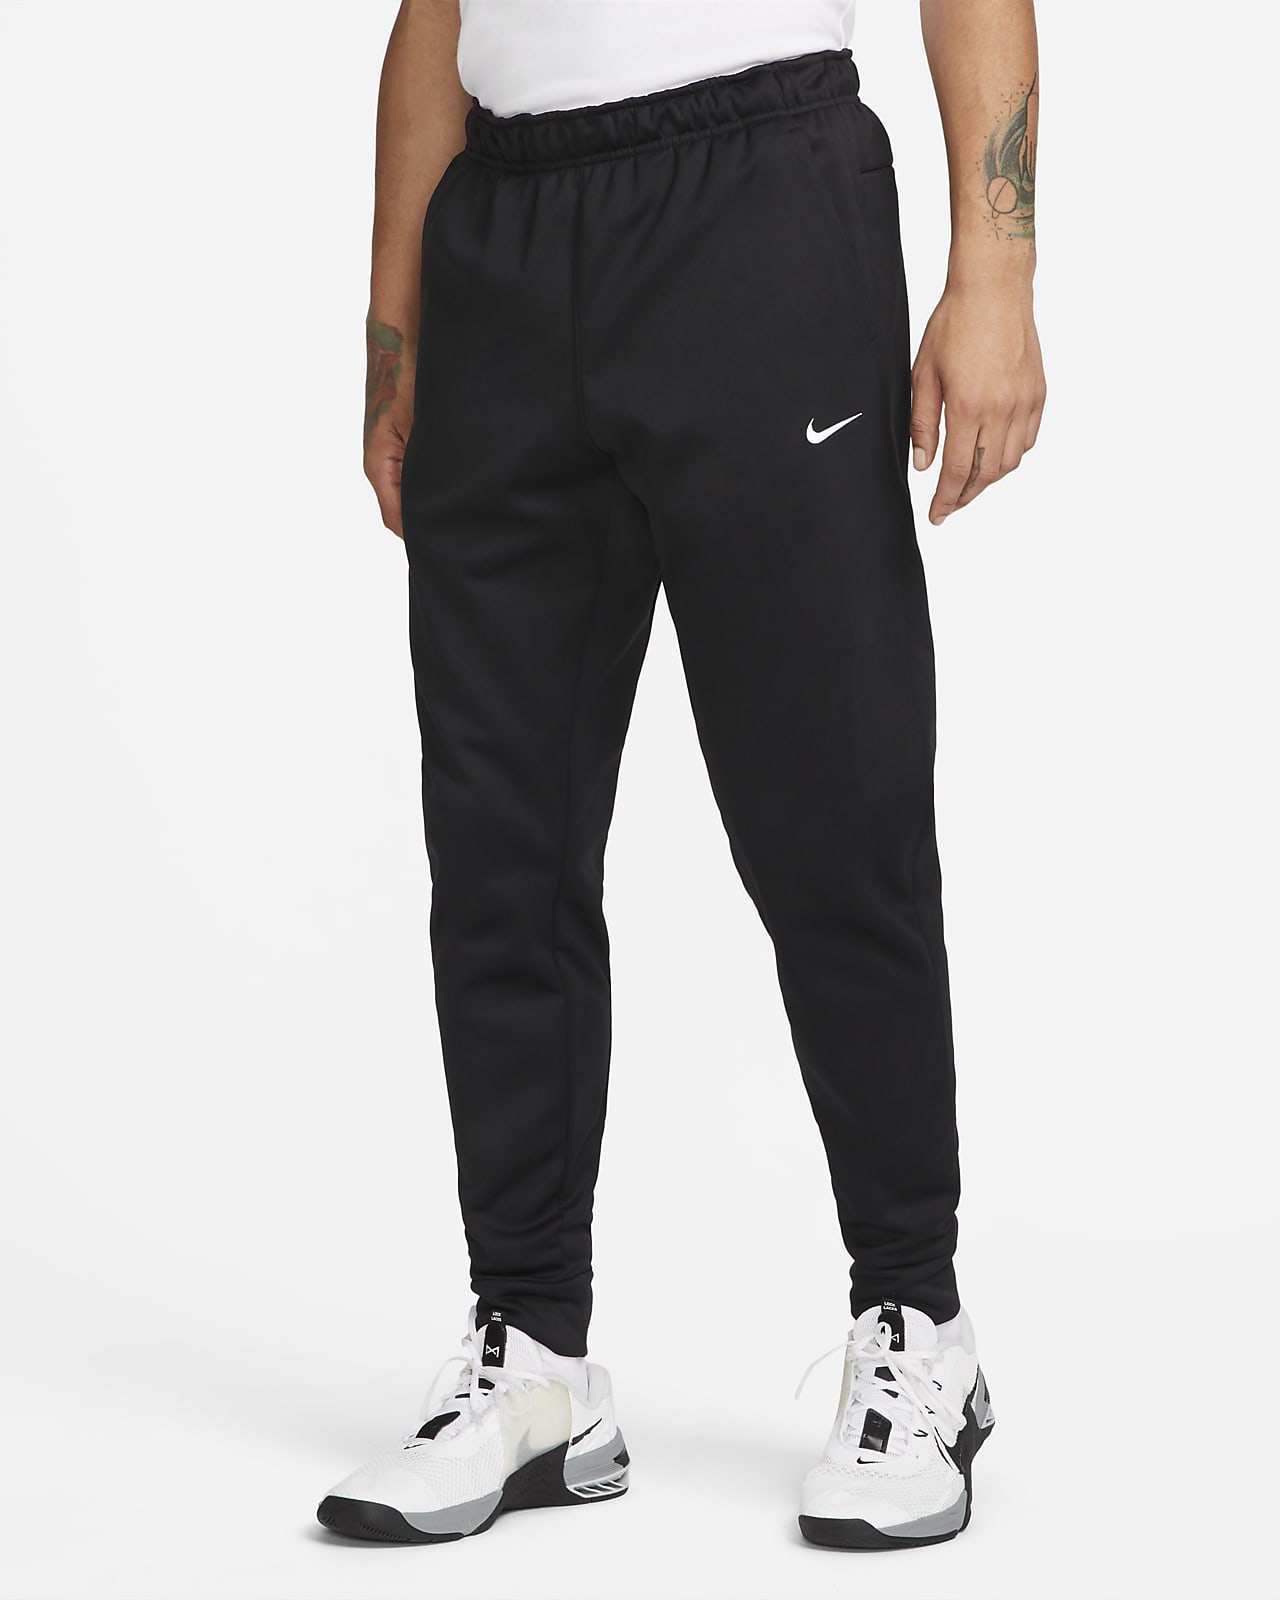 Men's Therma-FIT Fitness Pants. Nike.com